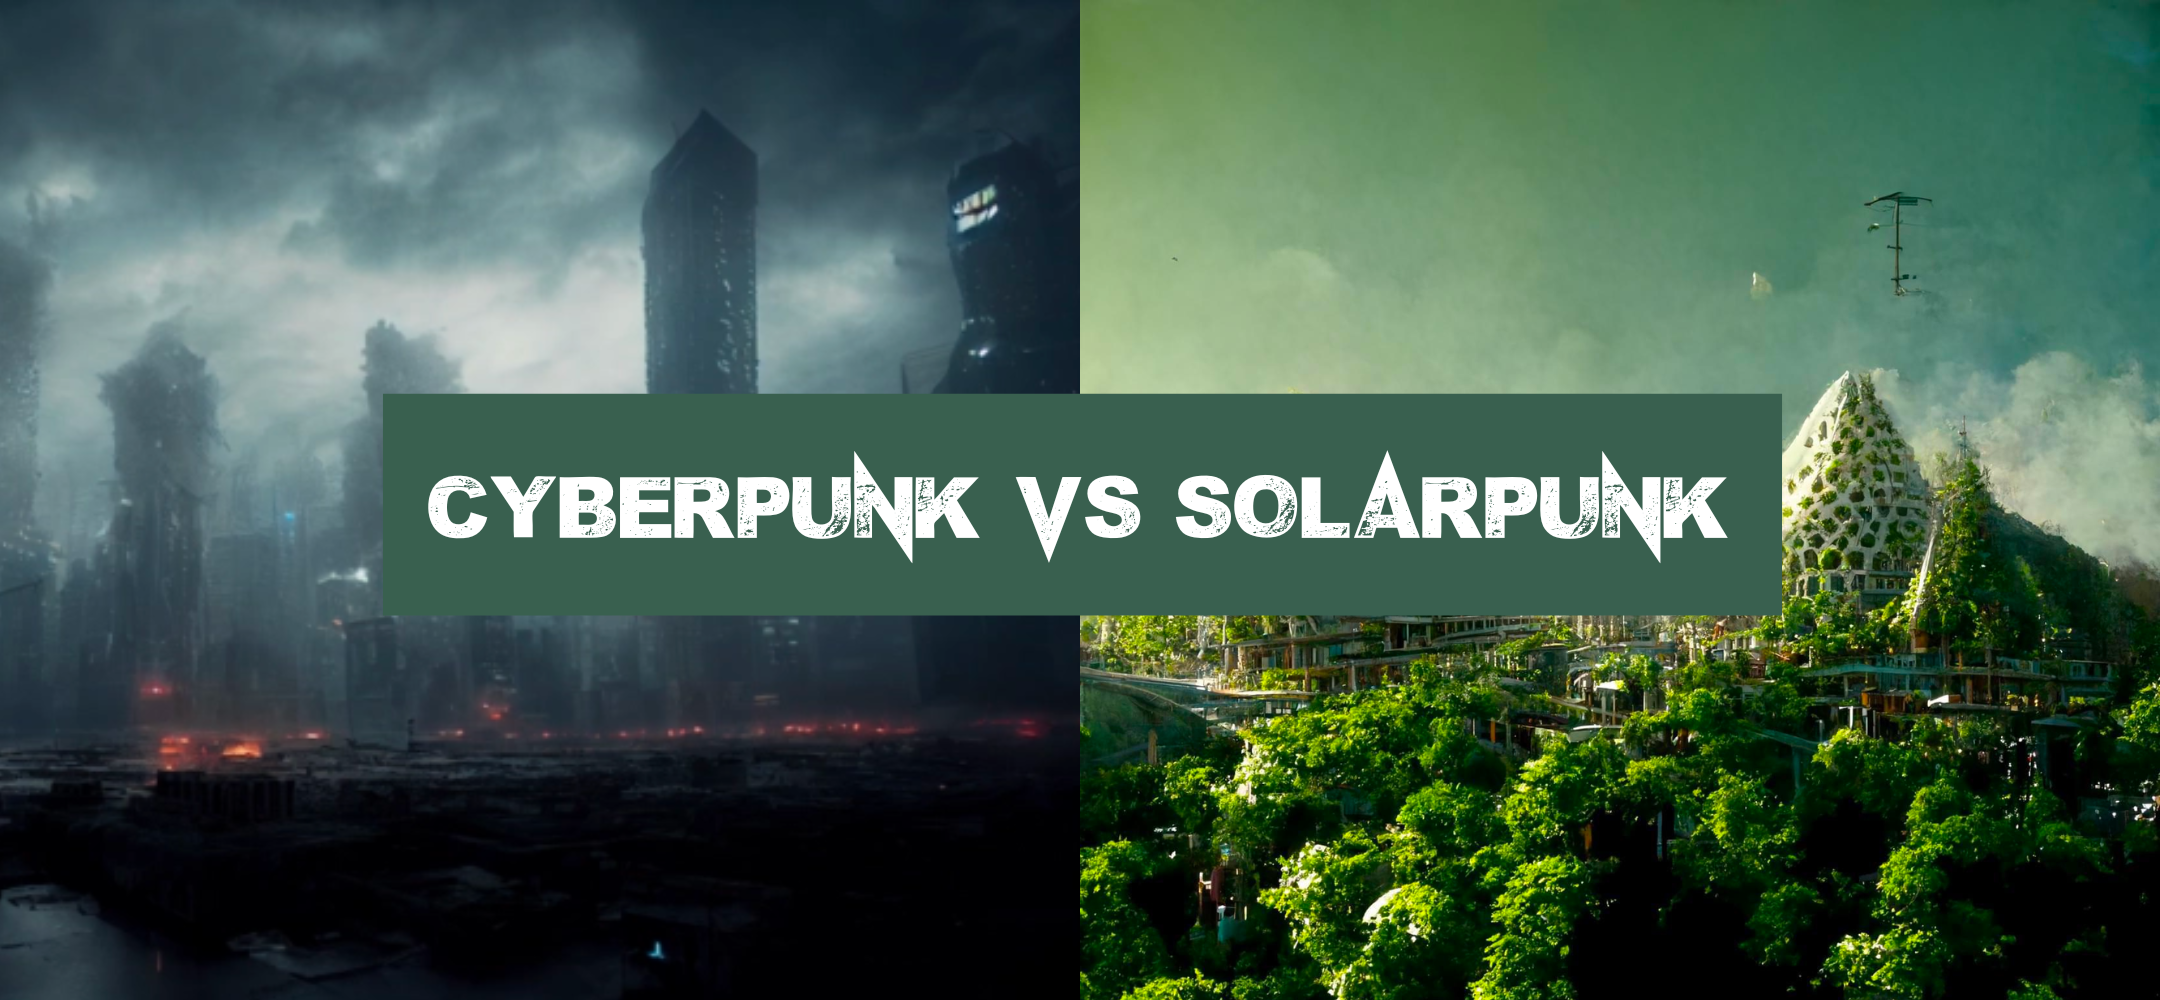 dark and polluted Cyberpunk city vs green solarpunk city